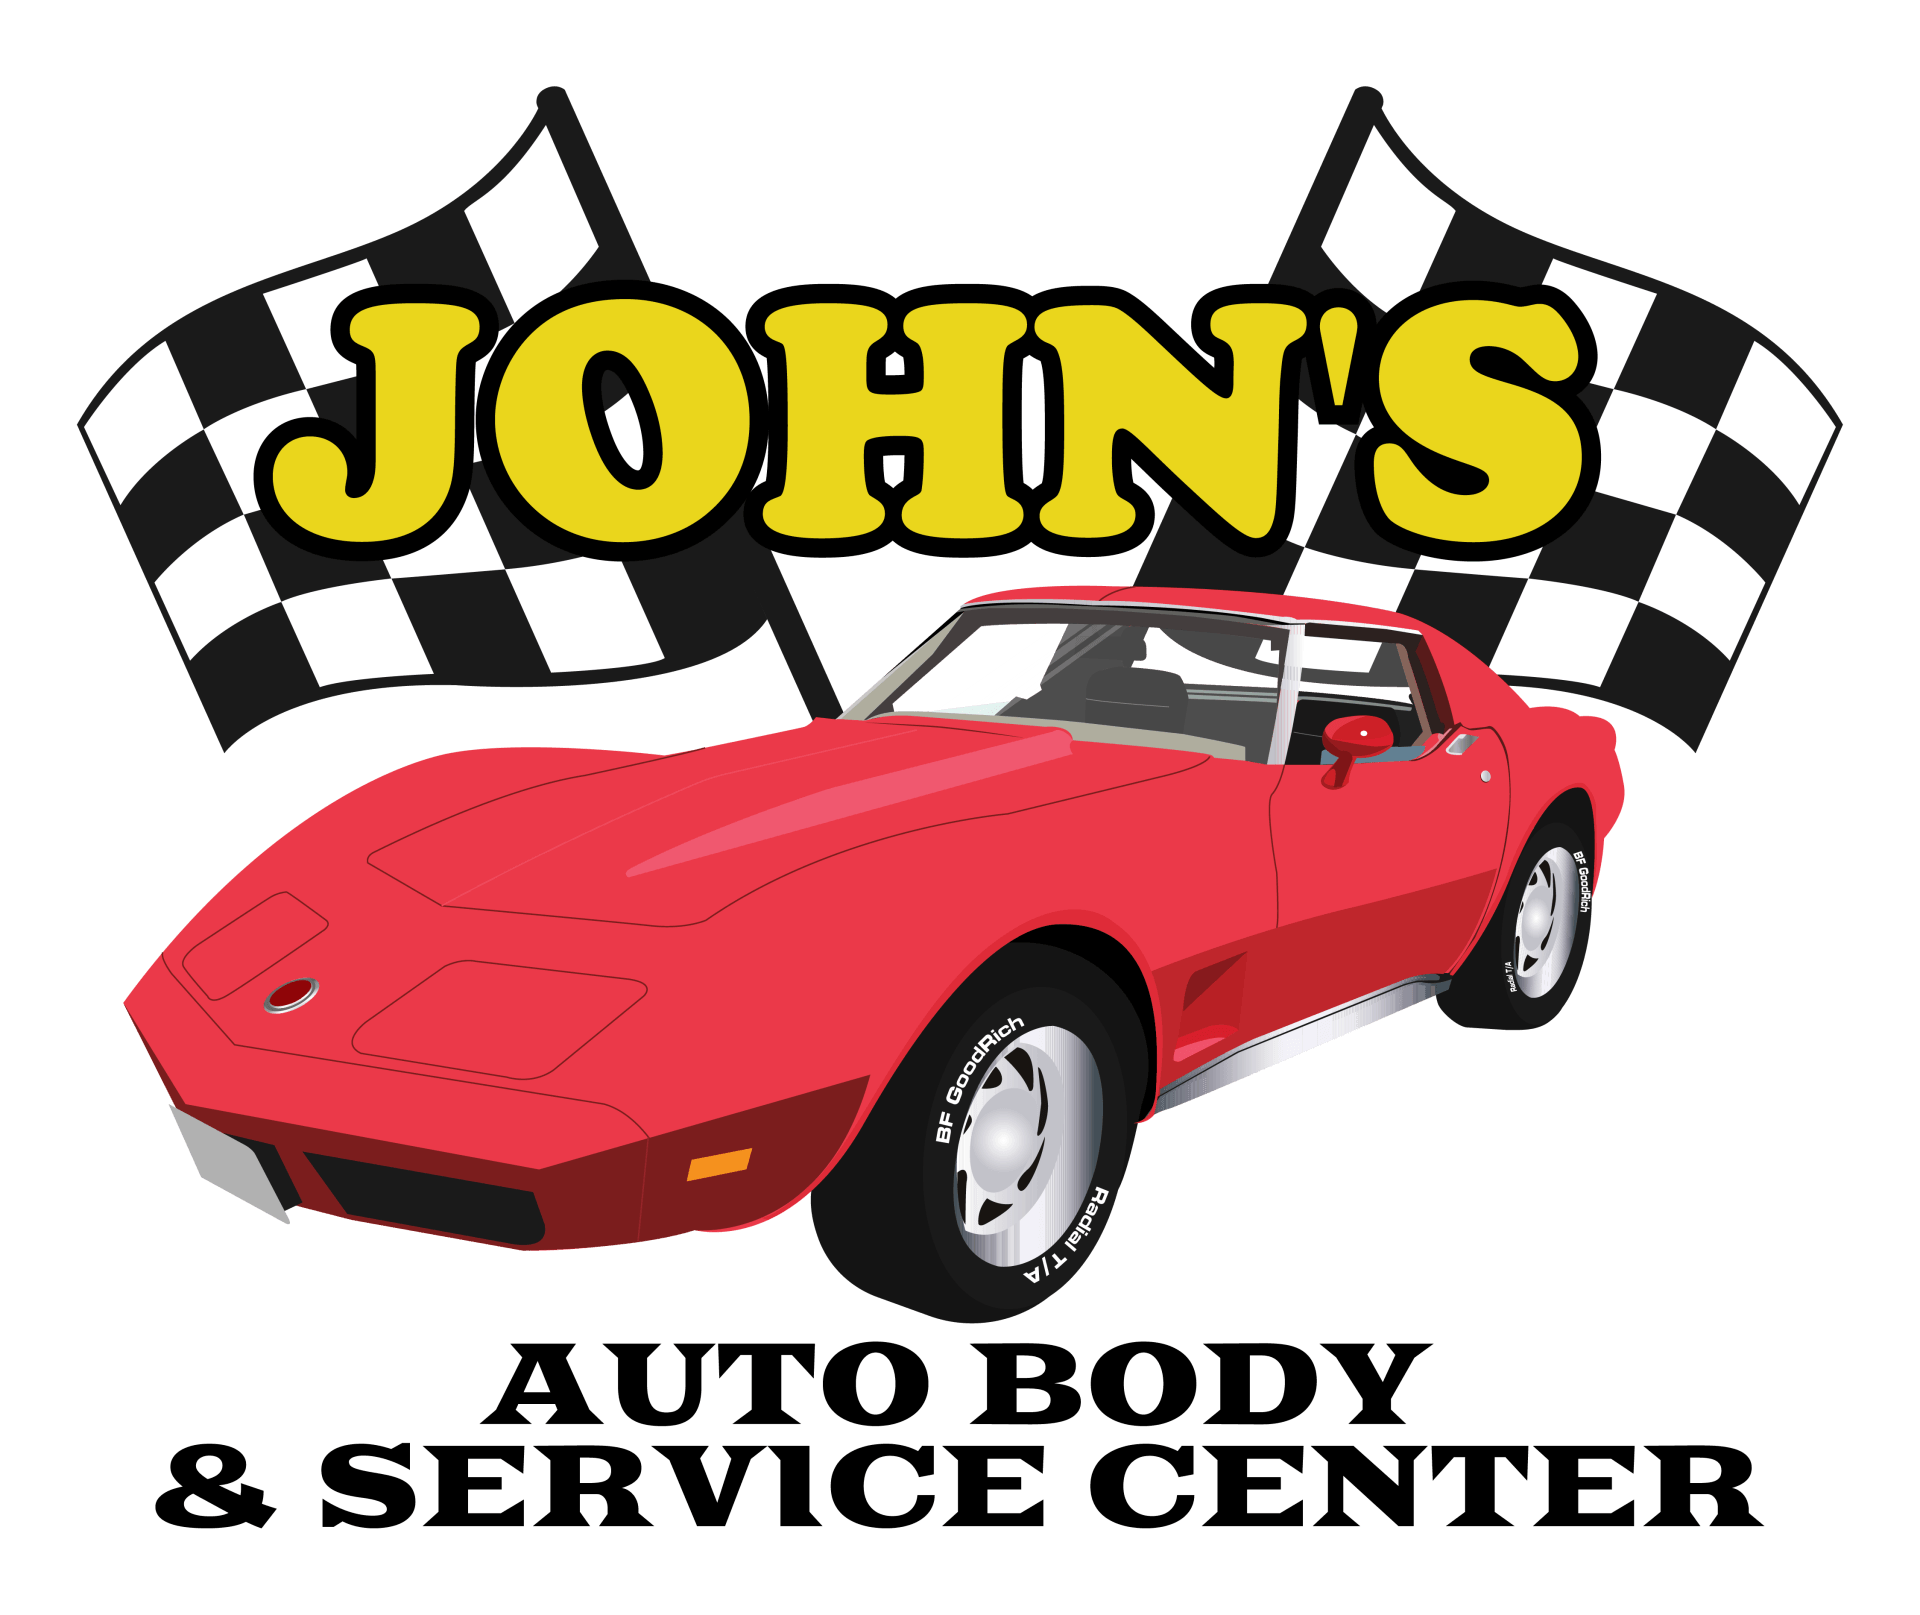 John's Auto Body & Service Center